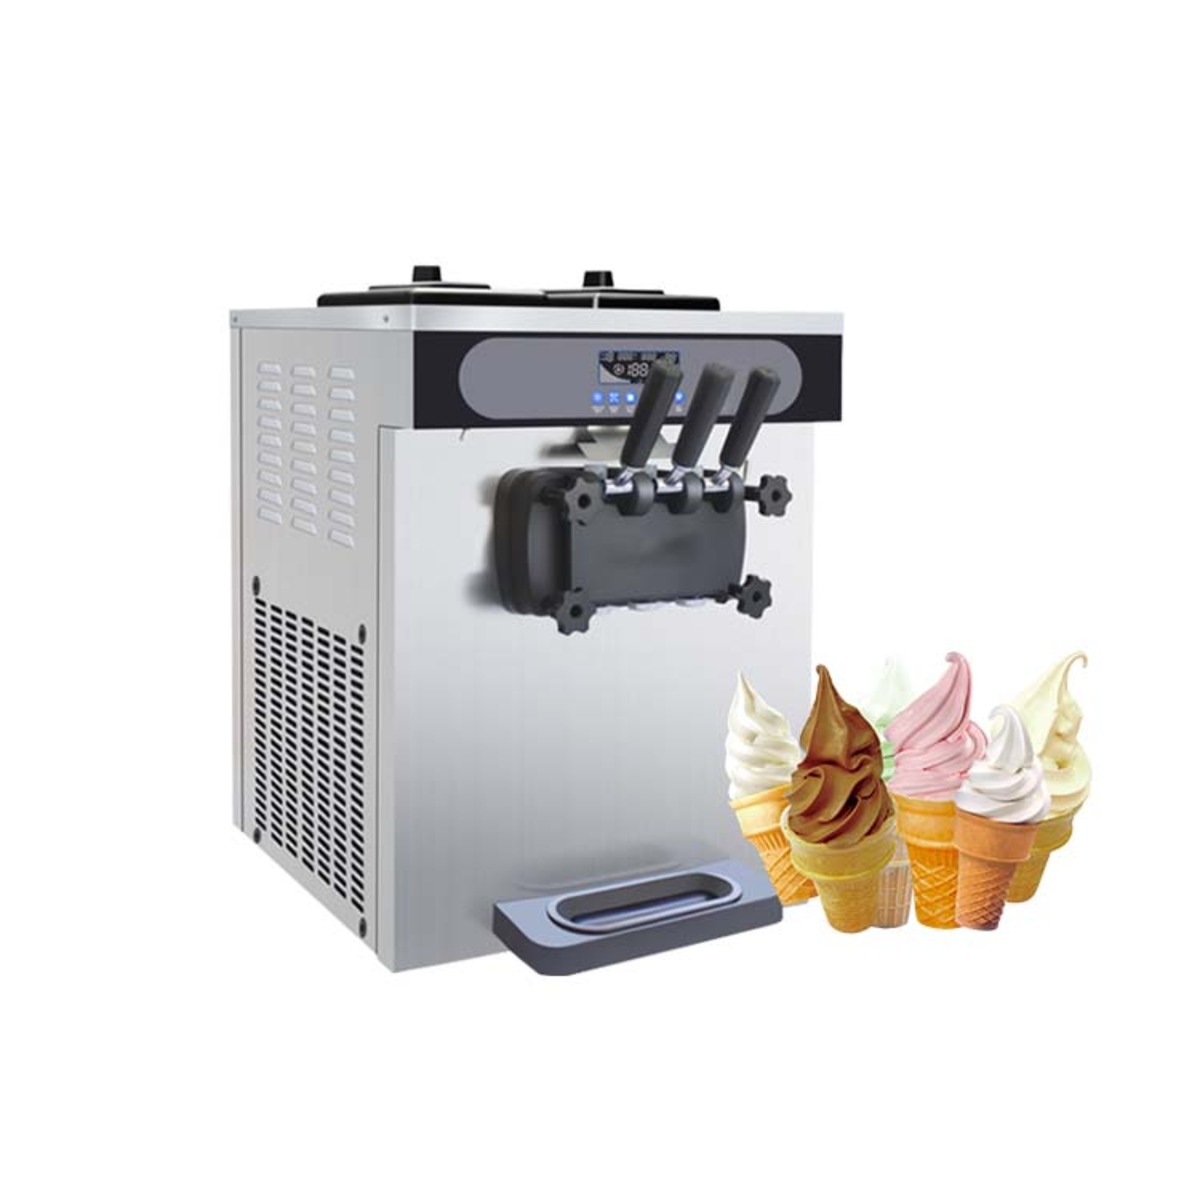 VEVOR Commercial Soft Ice Cream Machine Ice Cream Maker Single-Flavor 13 L/H